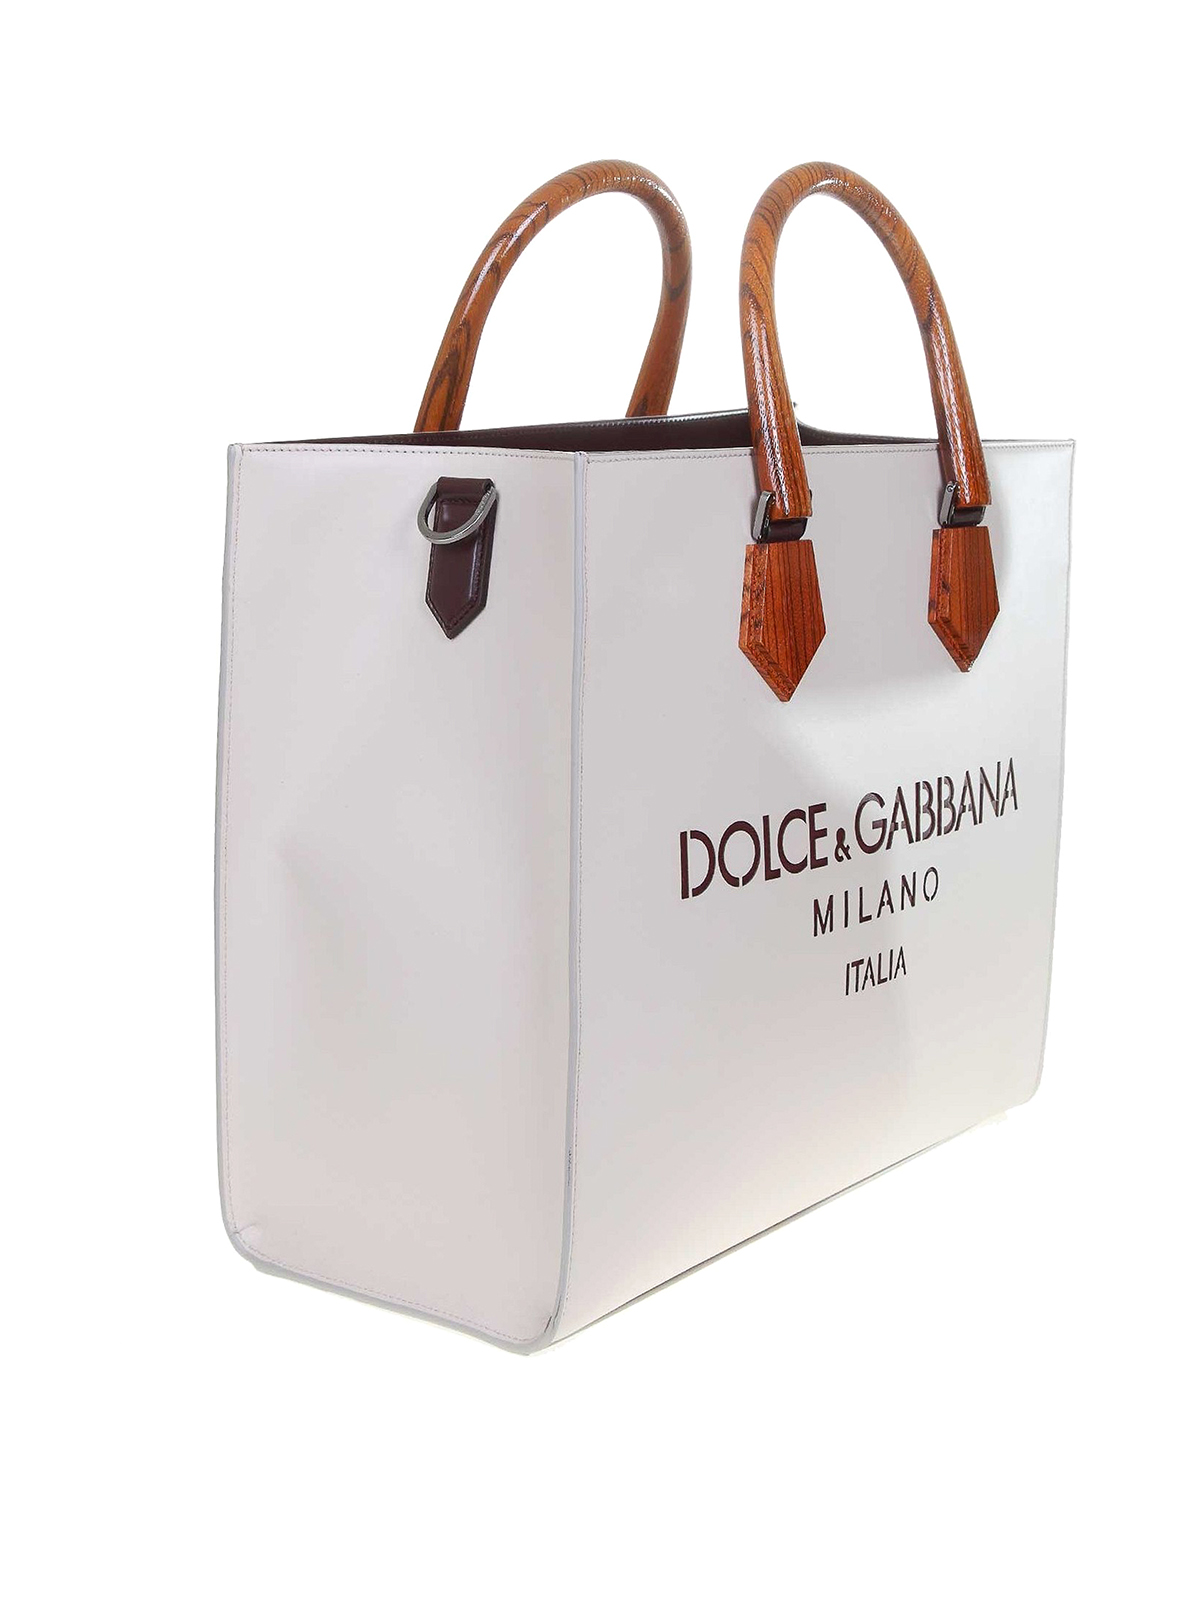 dolce & gabbana tote handbags